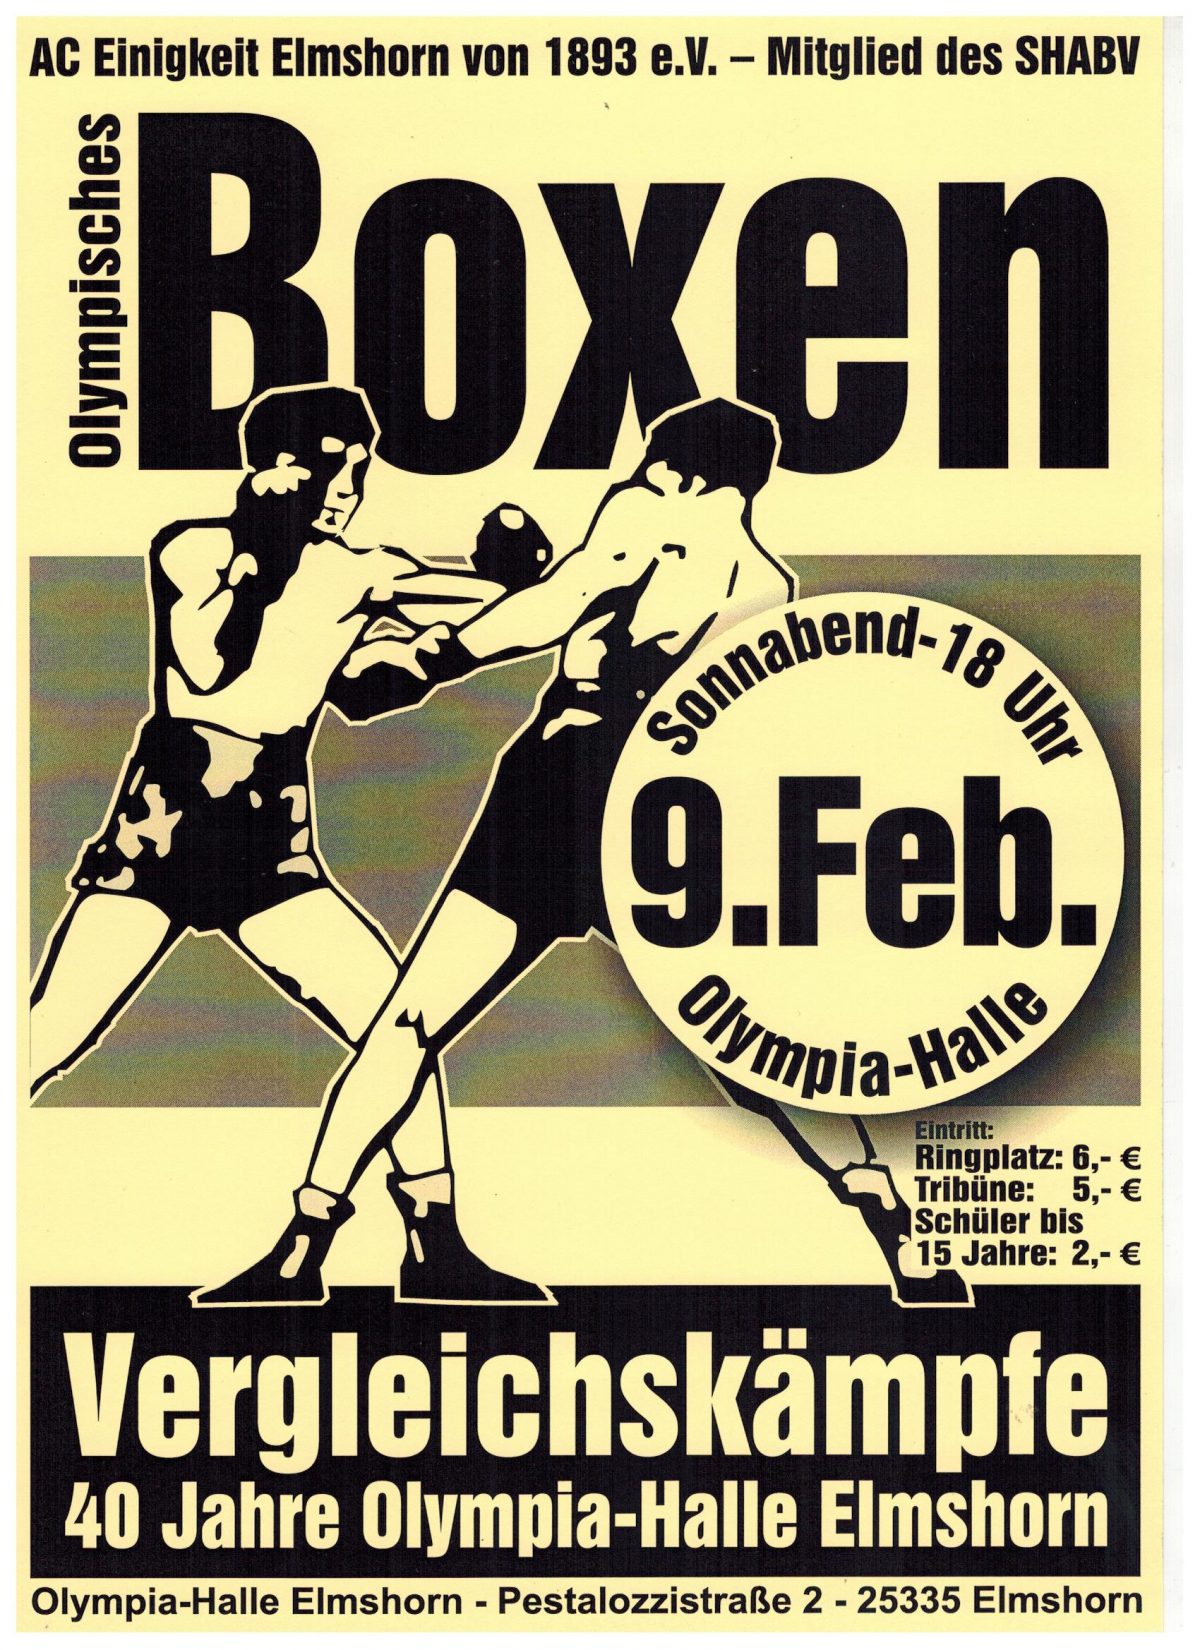 Boxen am 9. Februar 2019 in Elmshorn